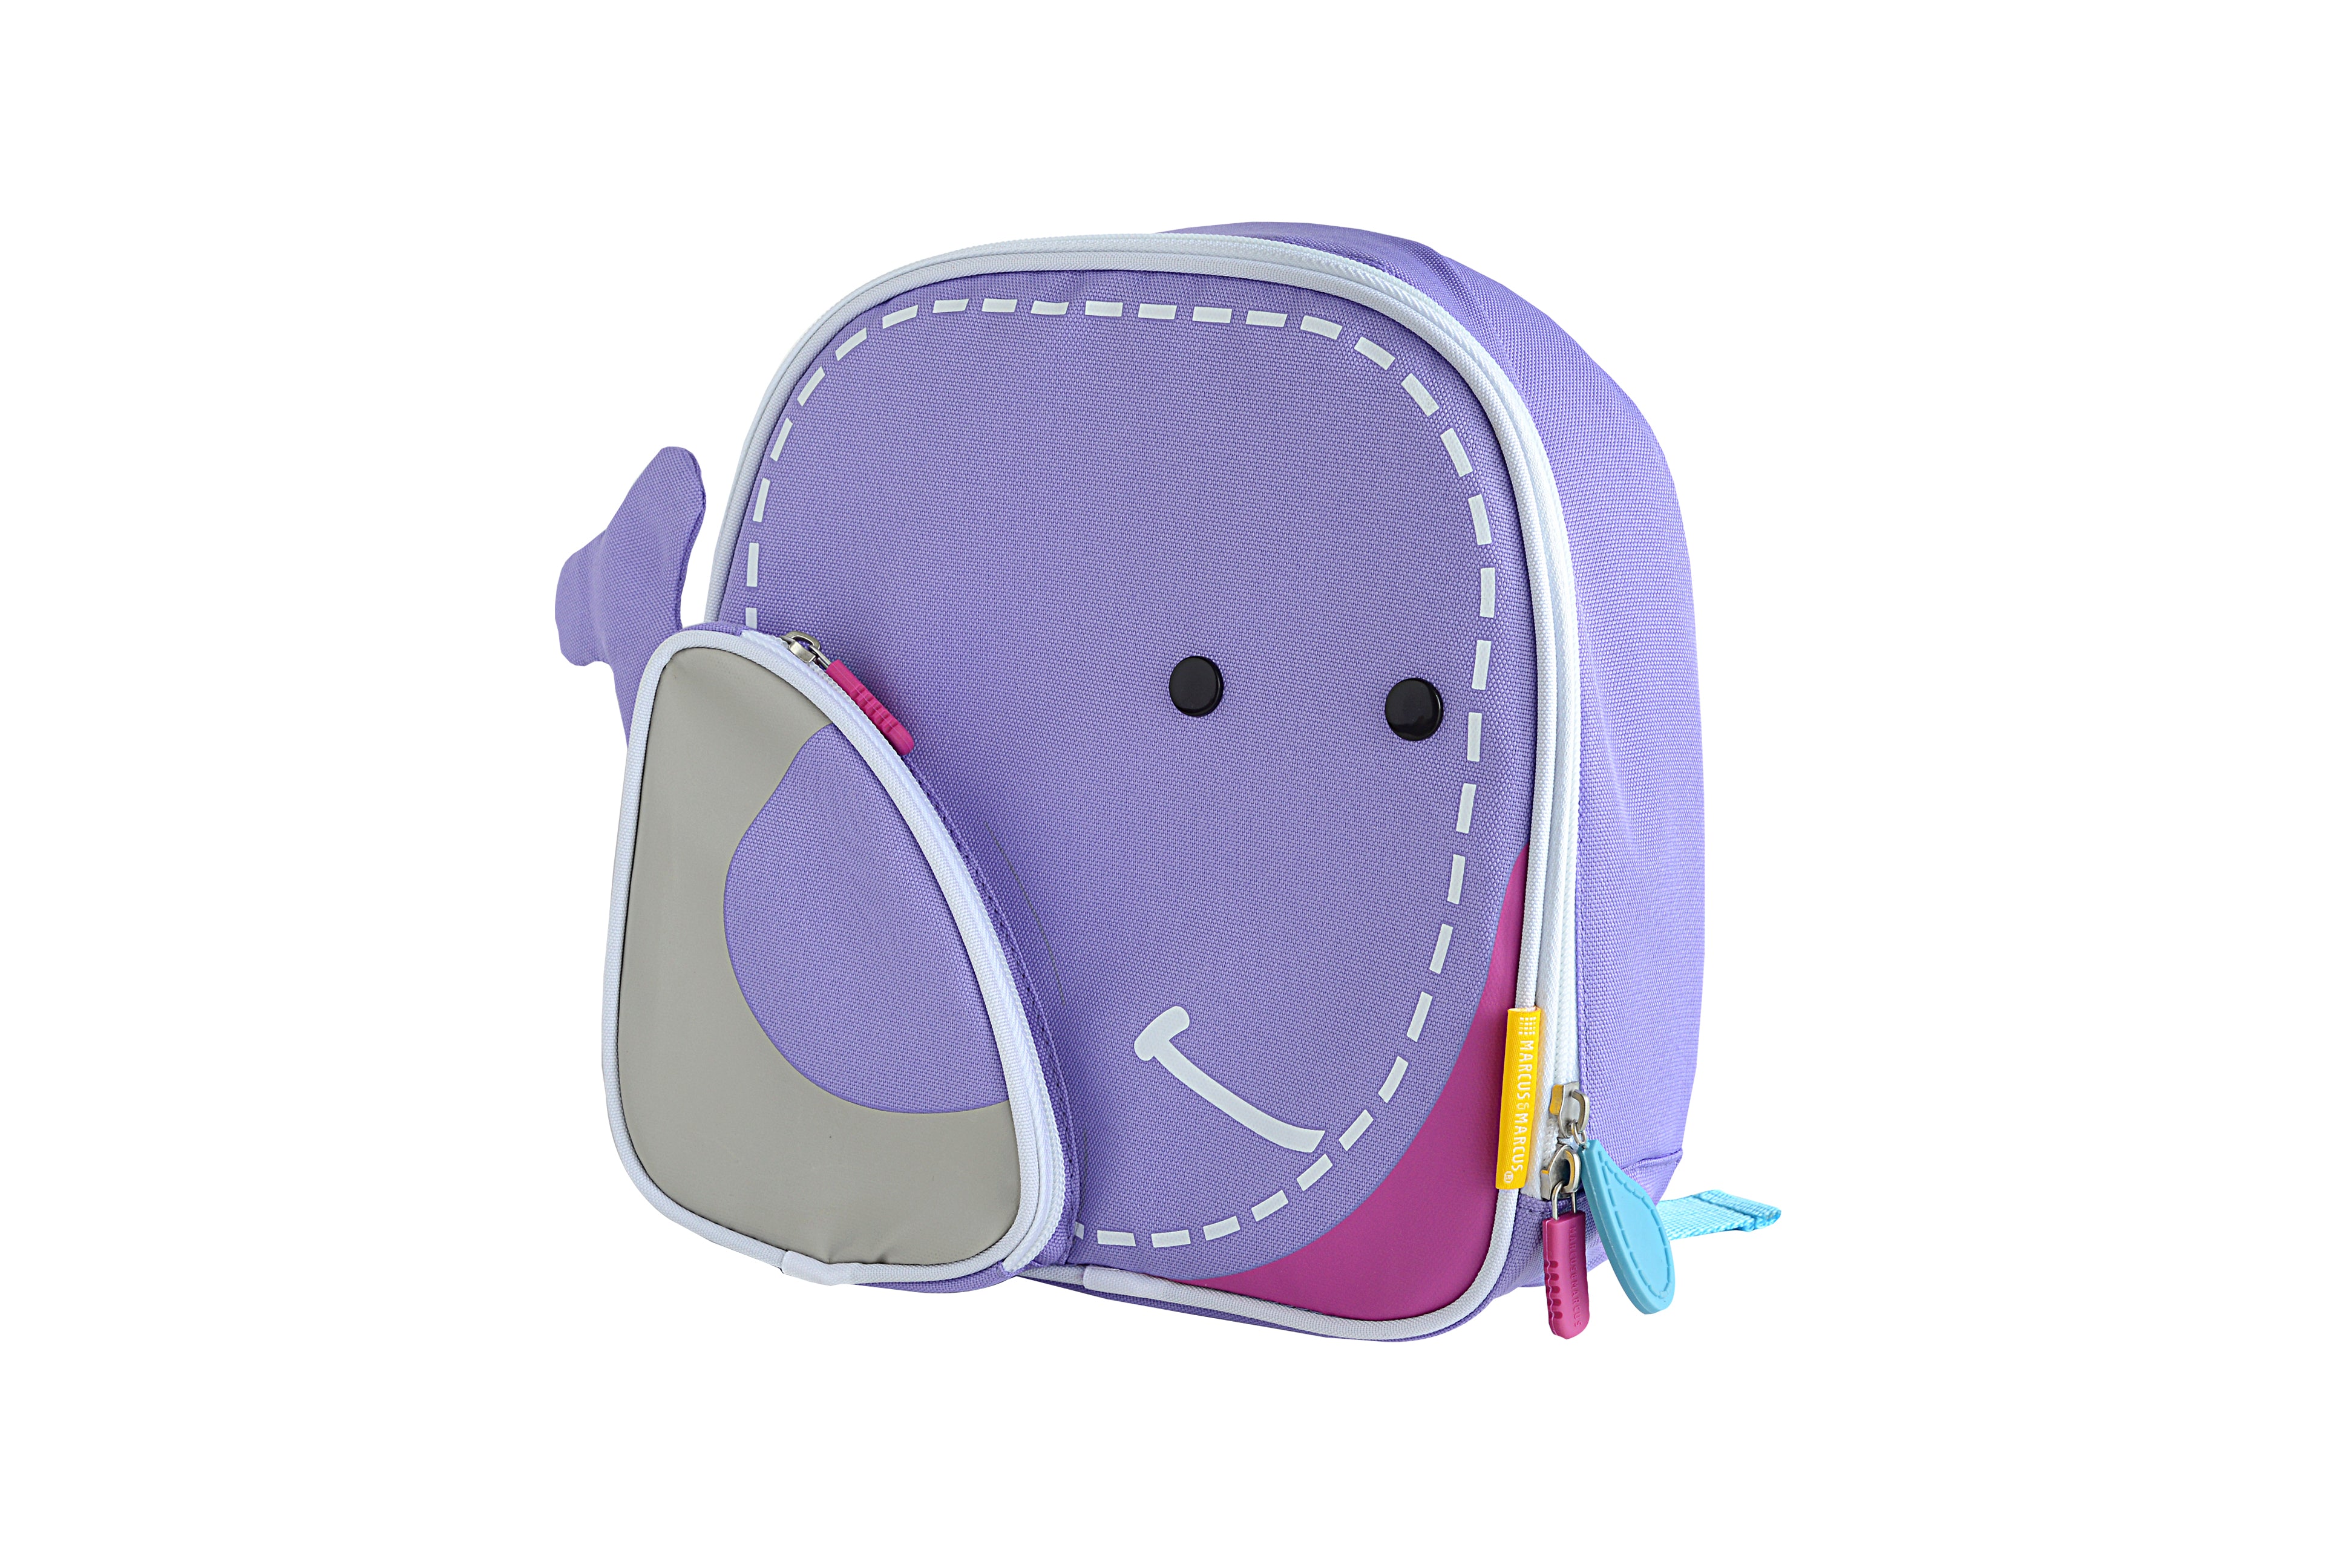 Luca backpack for boys Lunch box School Bag